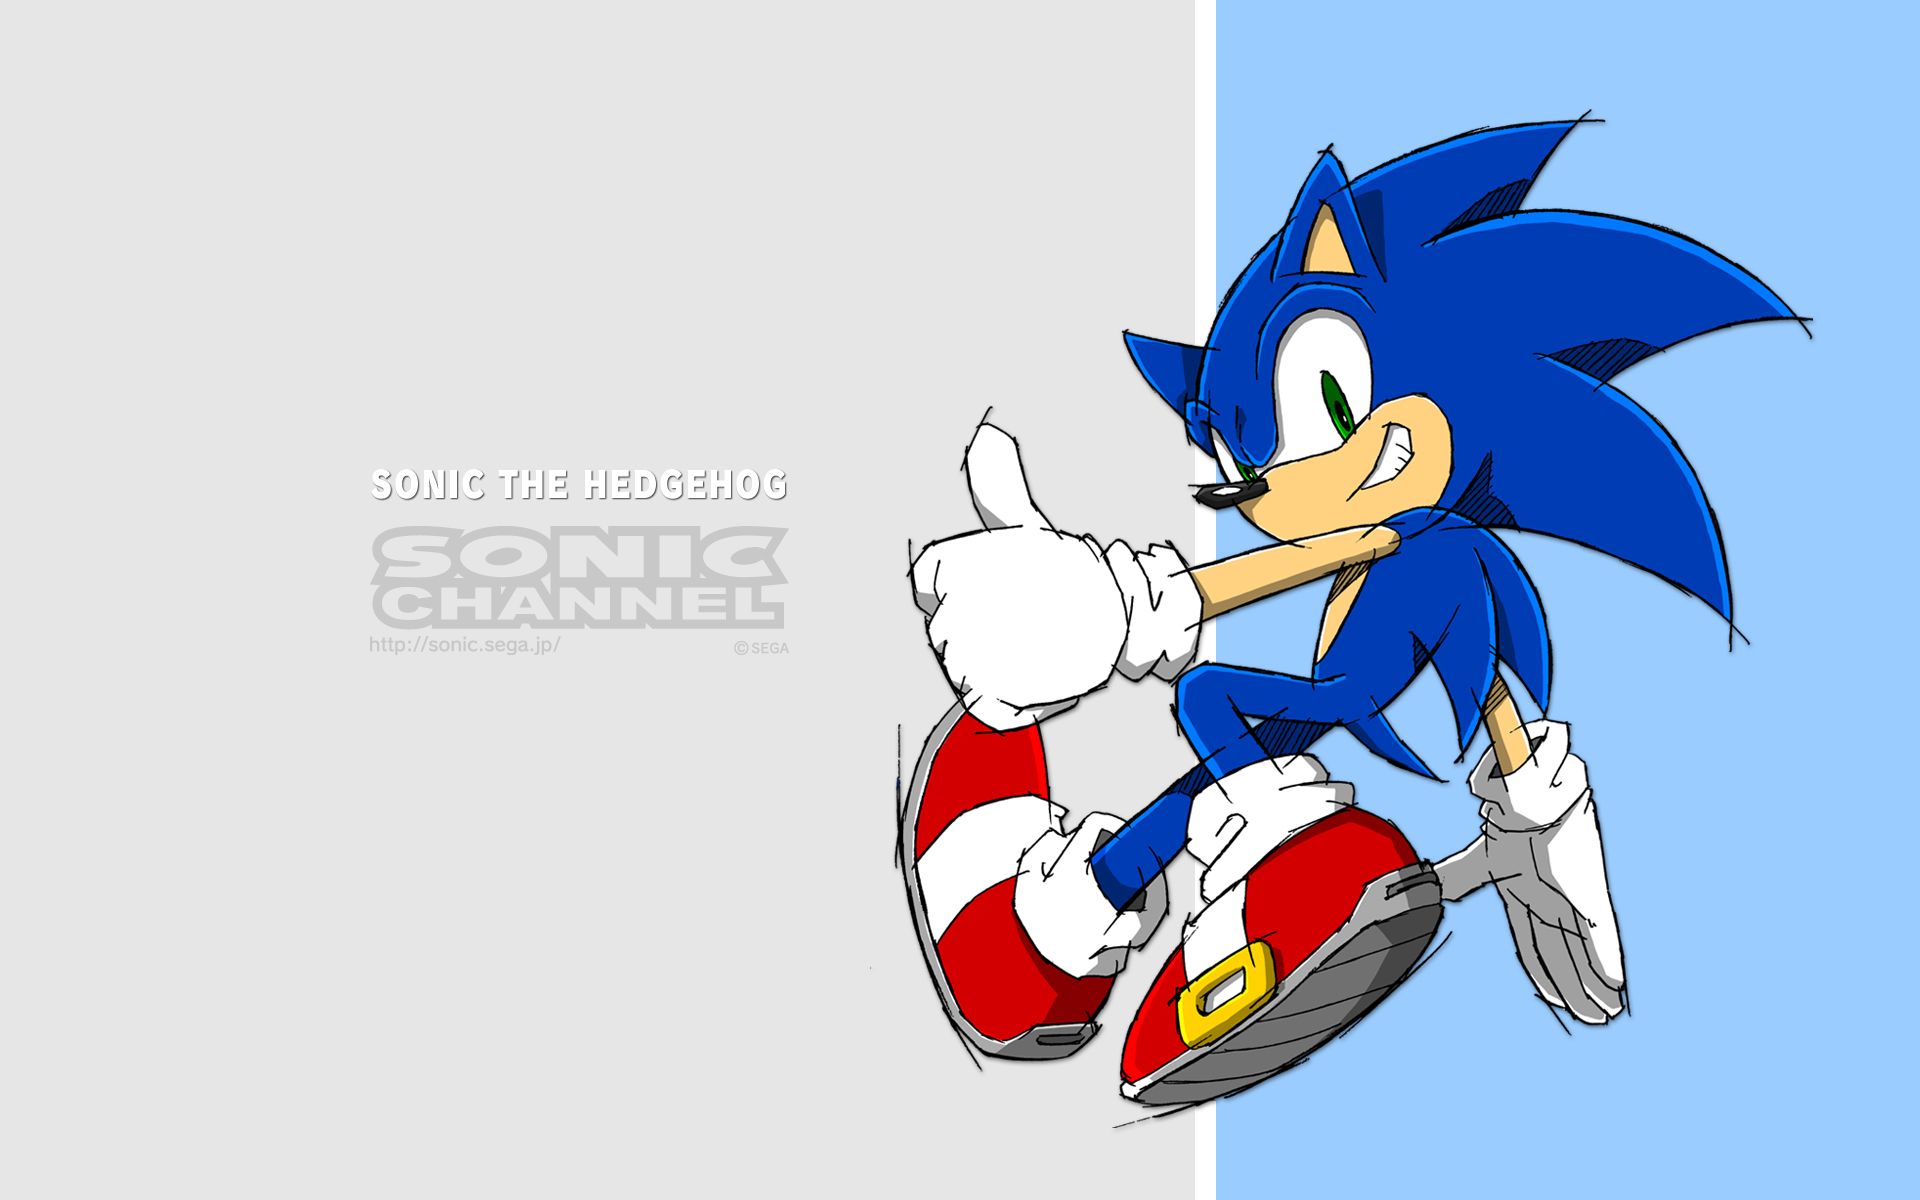 Sonic the Hedgehog wallpaper 1920x1200 1080p - Sonic